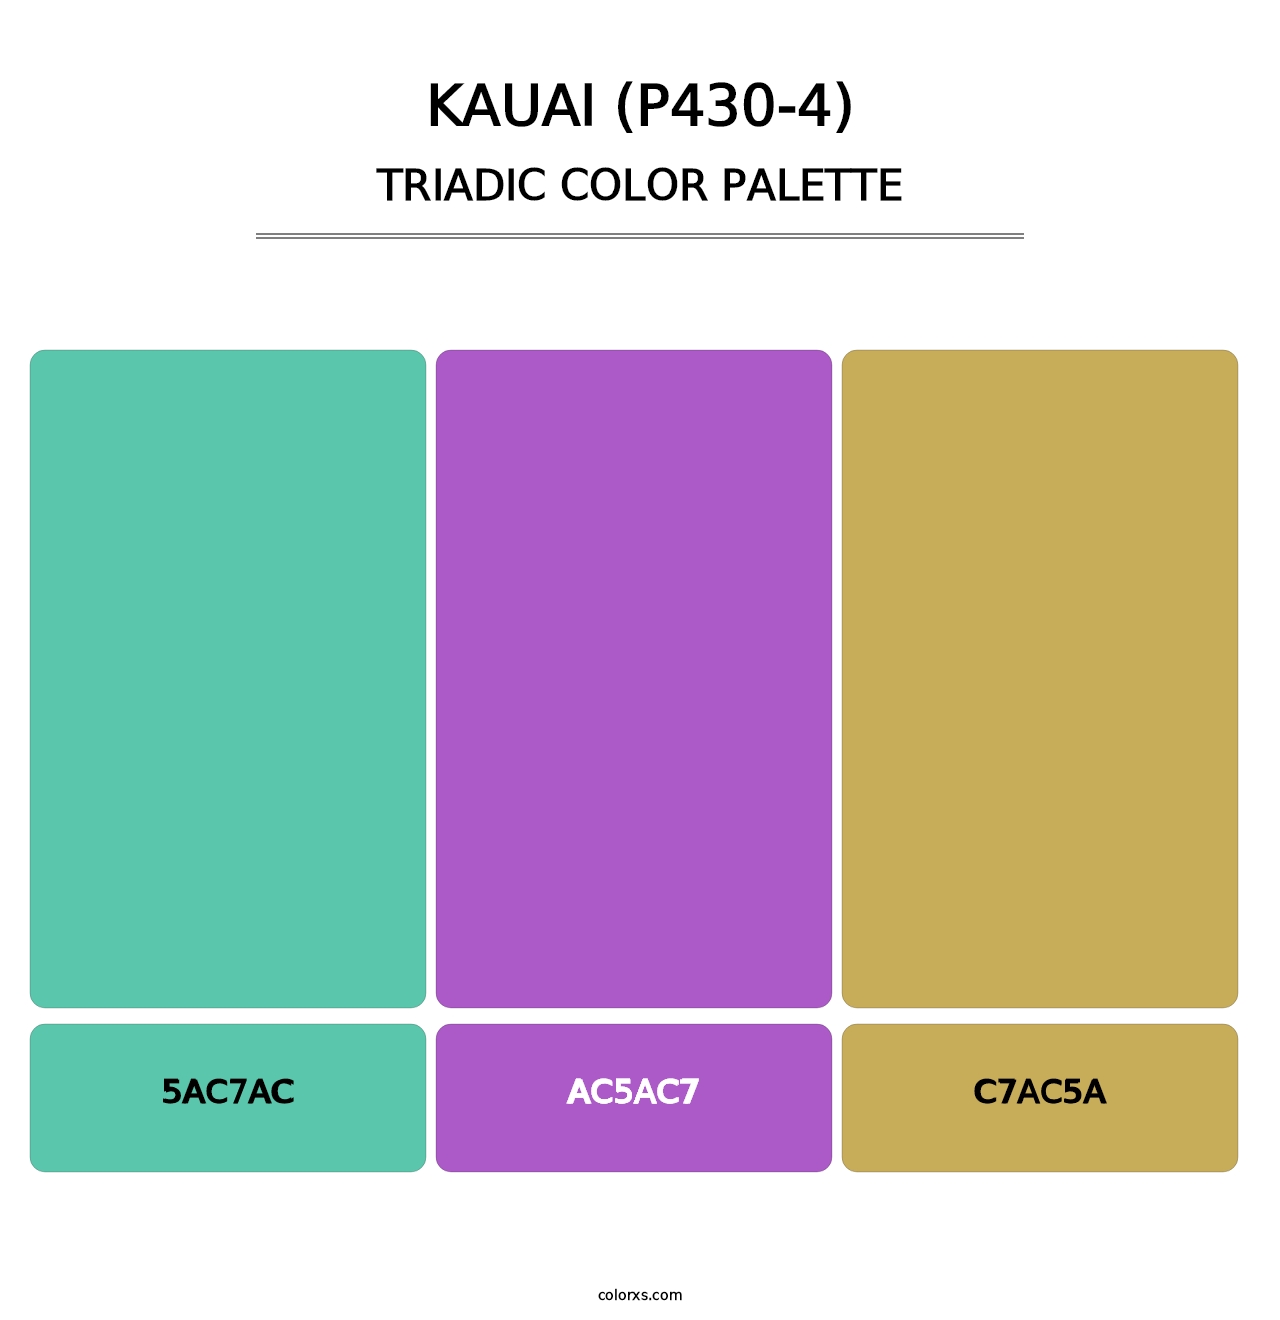 Kauai (P430-4) - Triadic Color Palette